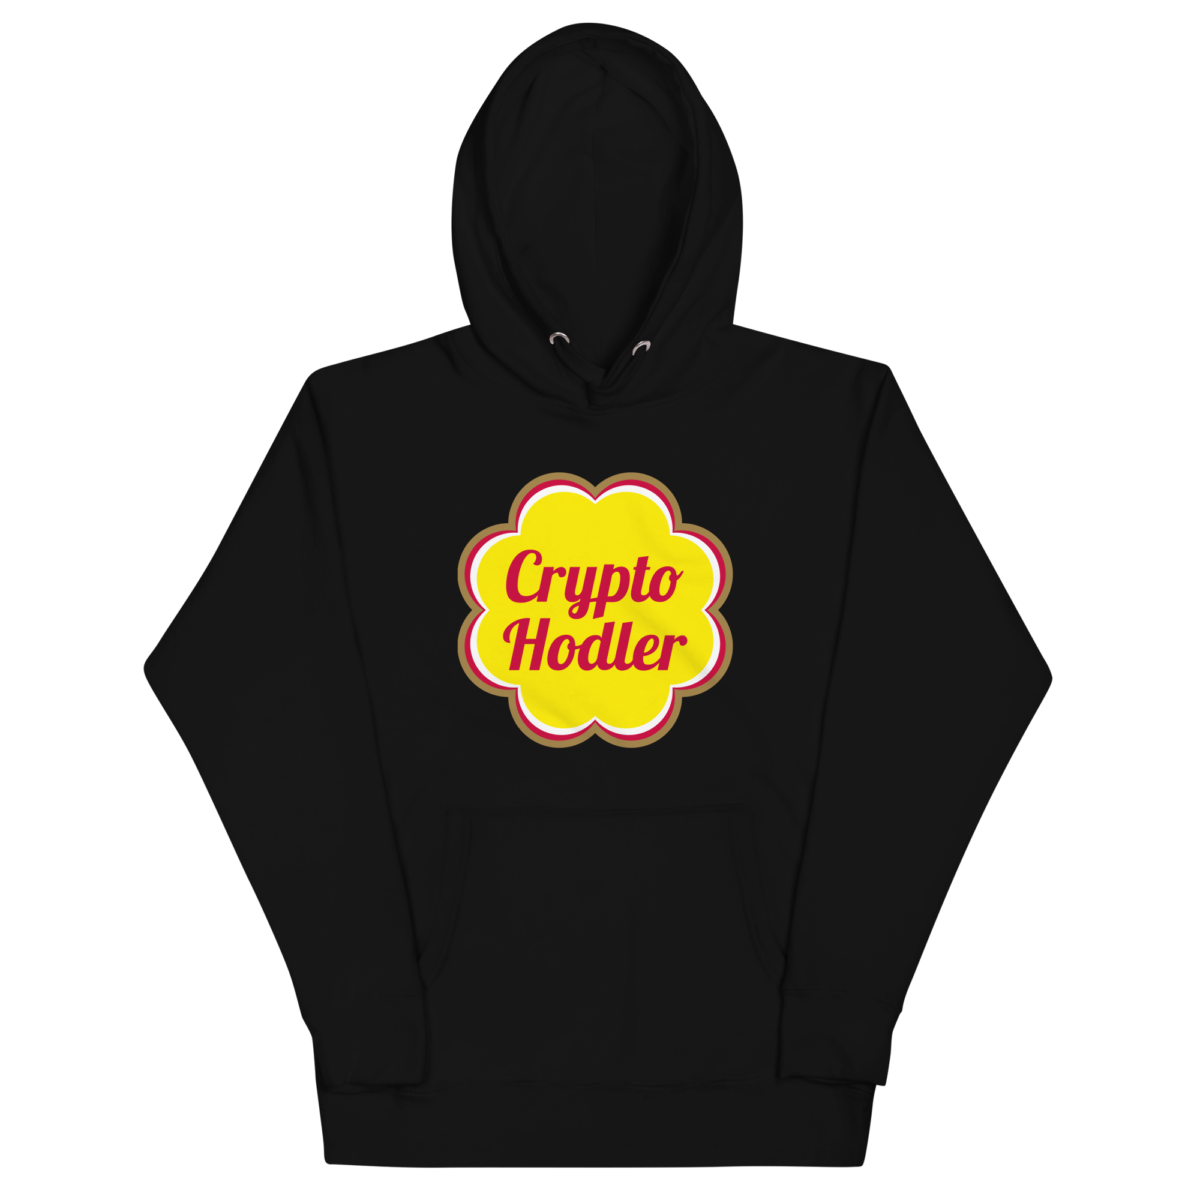 unisex premium hoodie black front 6357a8b80080e - Crypto Hodler Hoodie